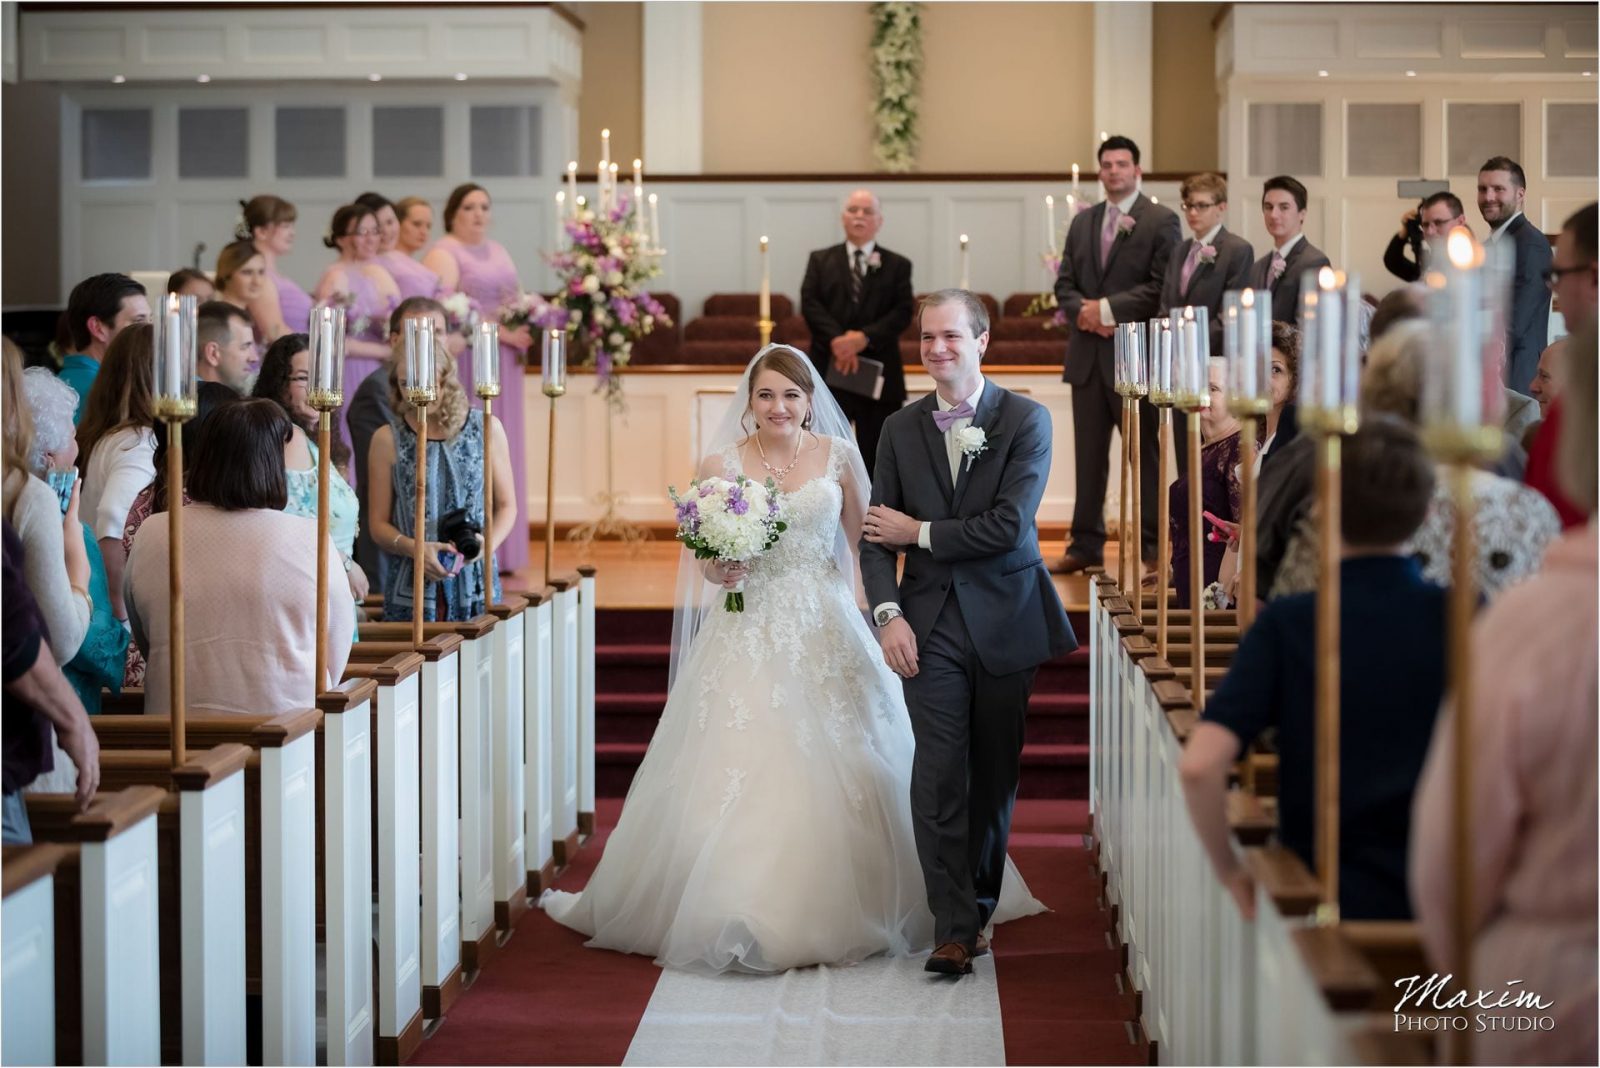 Anderson Hills UMC, Cincinnati Wedding Photography, Wedding Ceremony